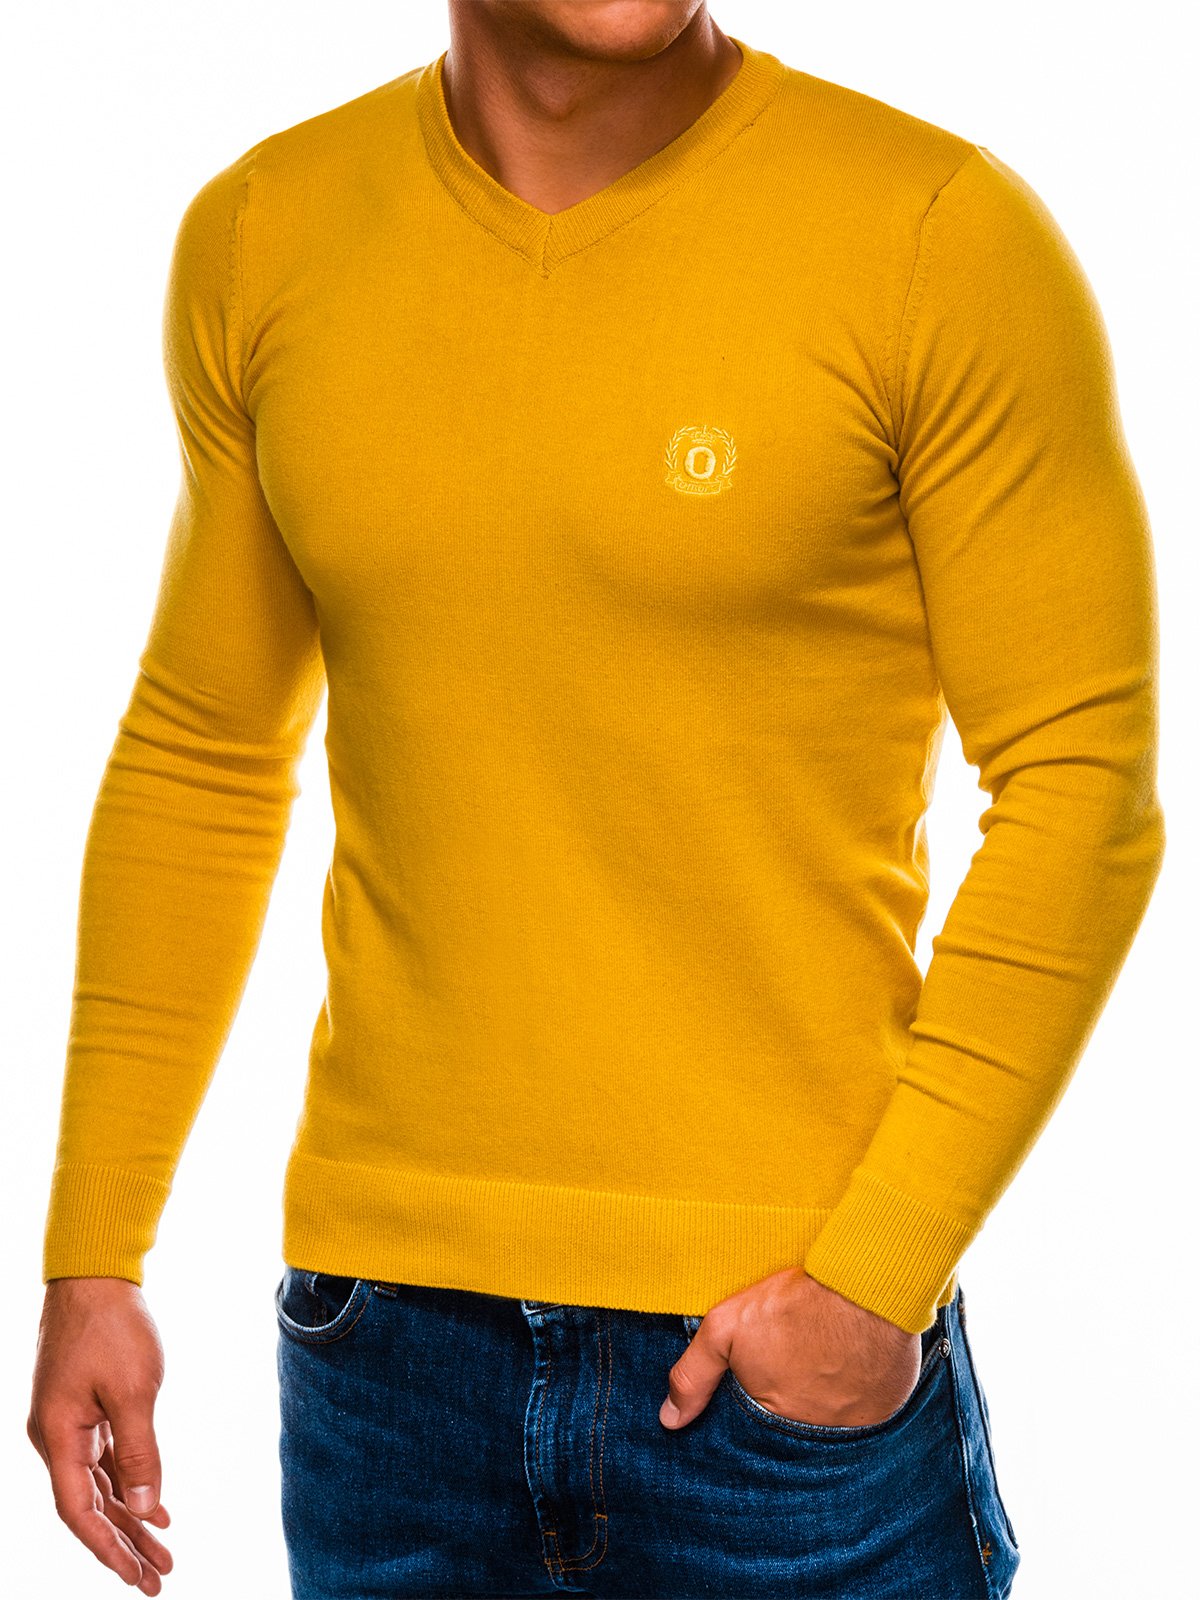 Men's sweater E74 - yellow | MODONE wholesale - Clothing For Men